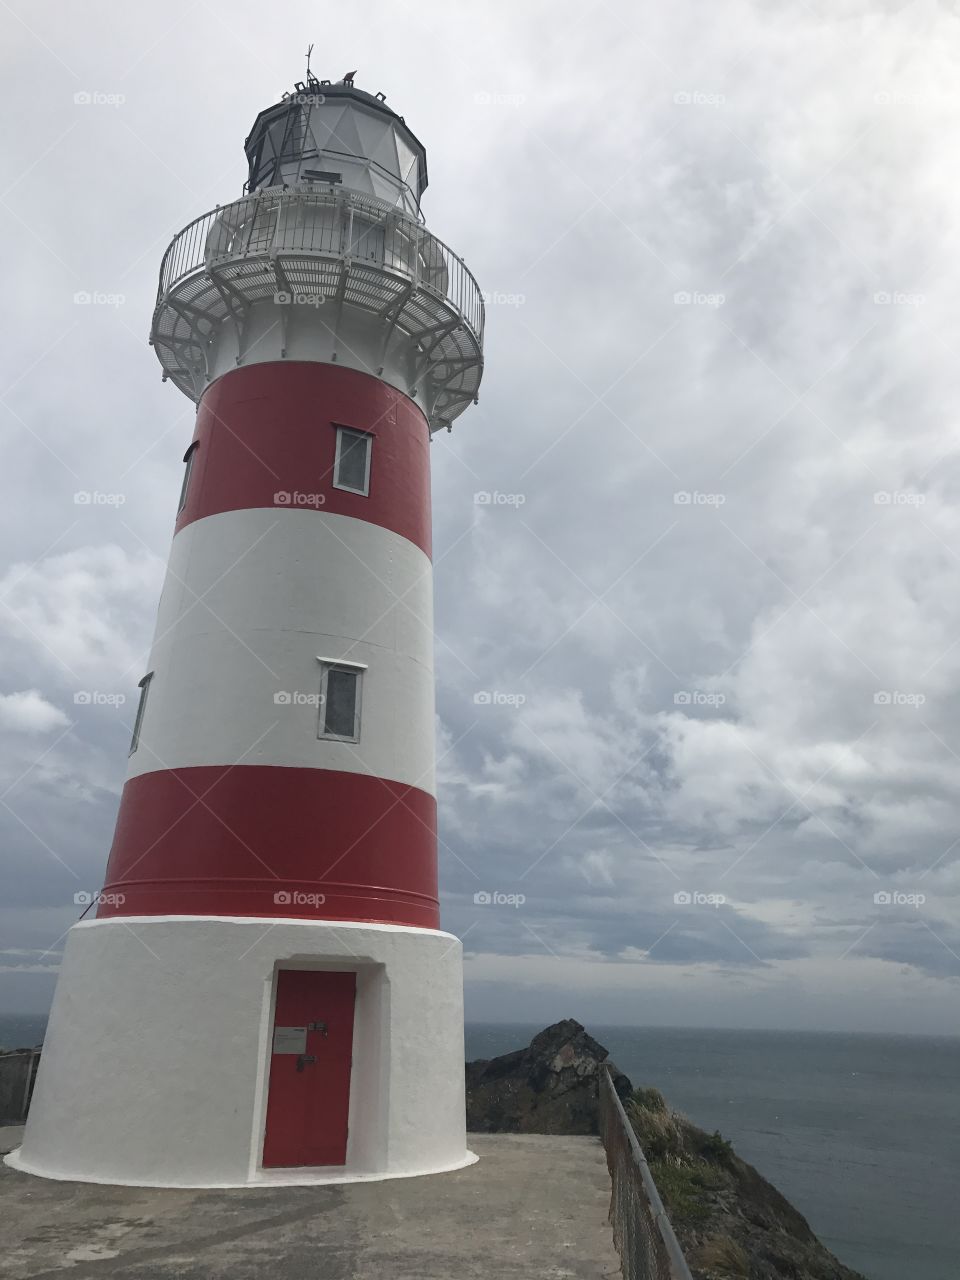 Lighthouse, Cape Pallisar, New Zealand, January 2017